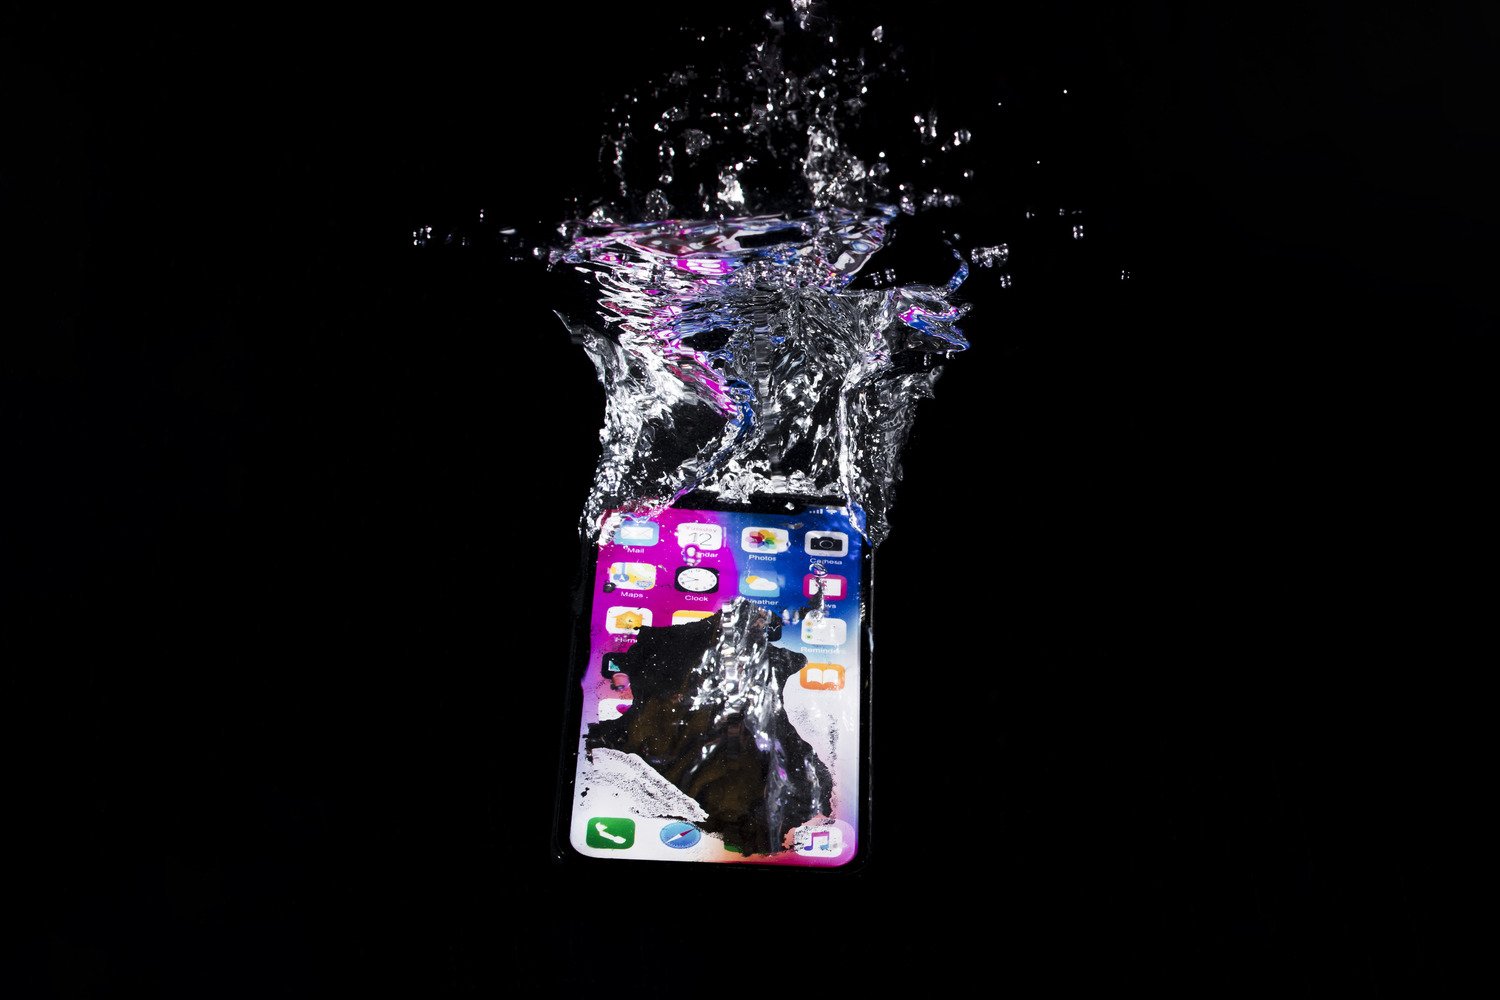 water resistant phones